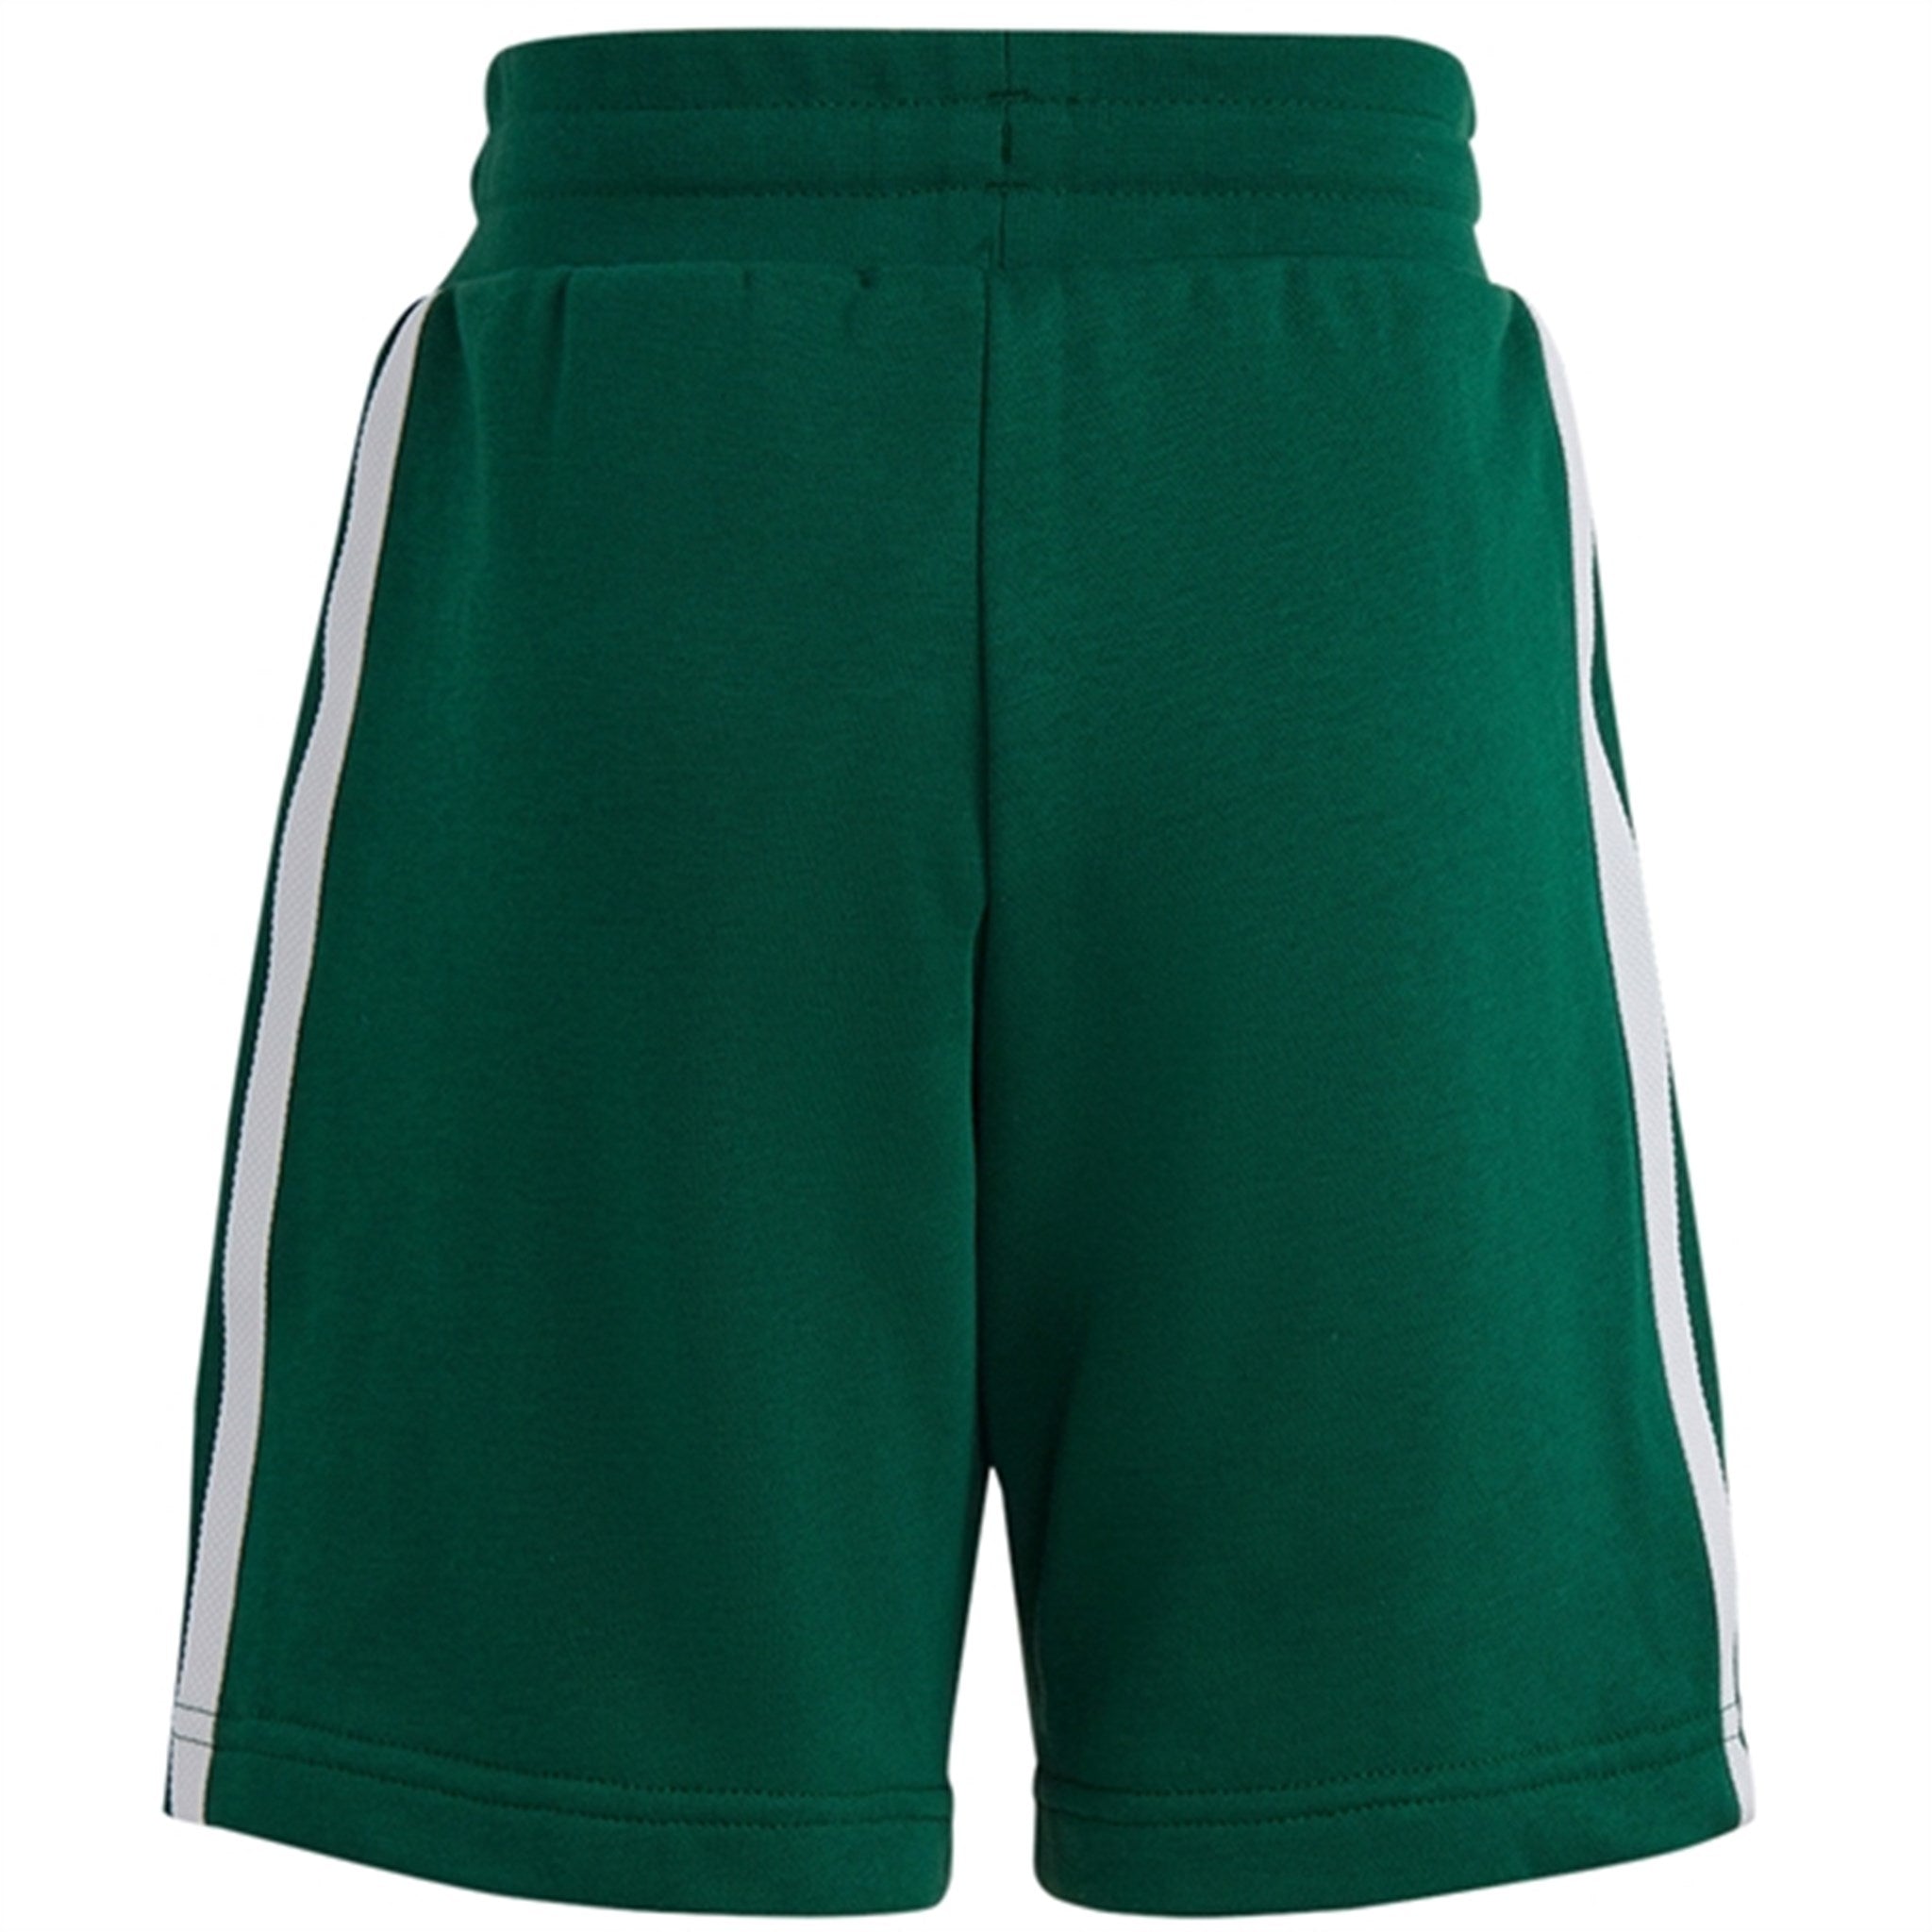 adidas Originals Dark Green Shorts Tee Set 7